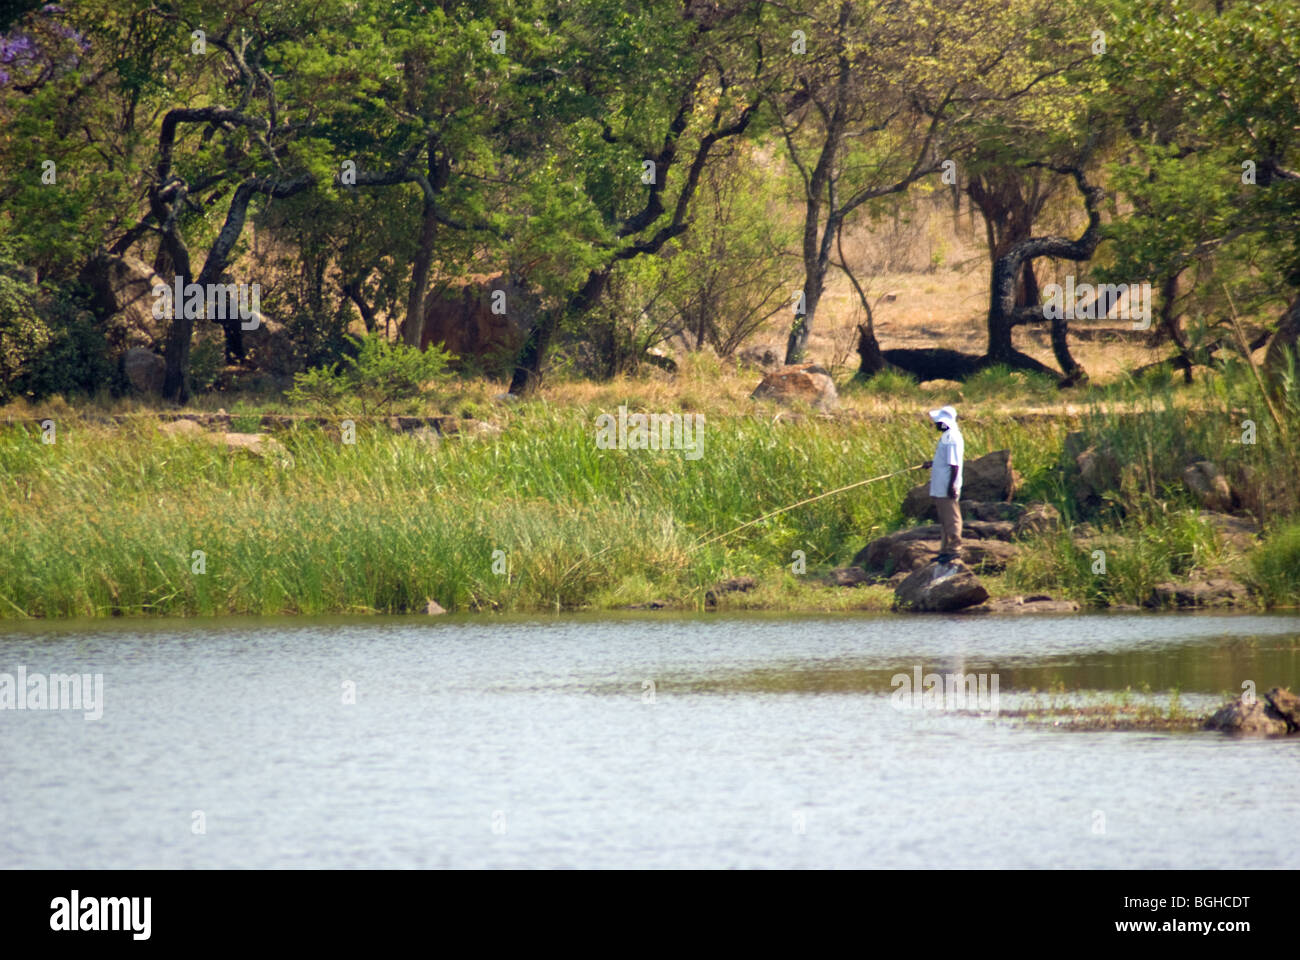 A man fishing for food at Hillside Dams in Bulawayo, Zimbabwe. Stock Photo